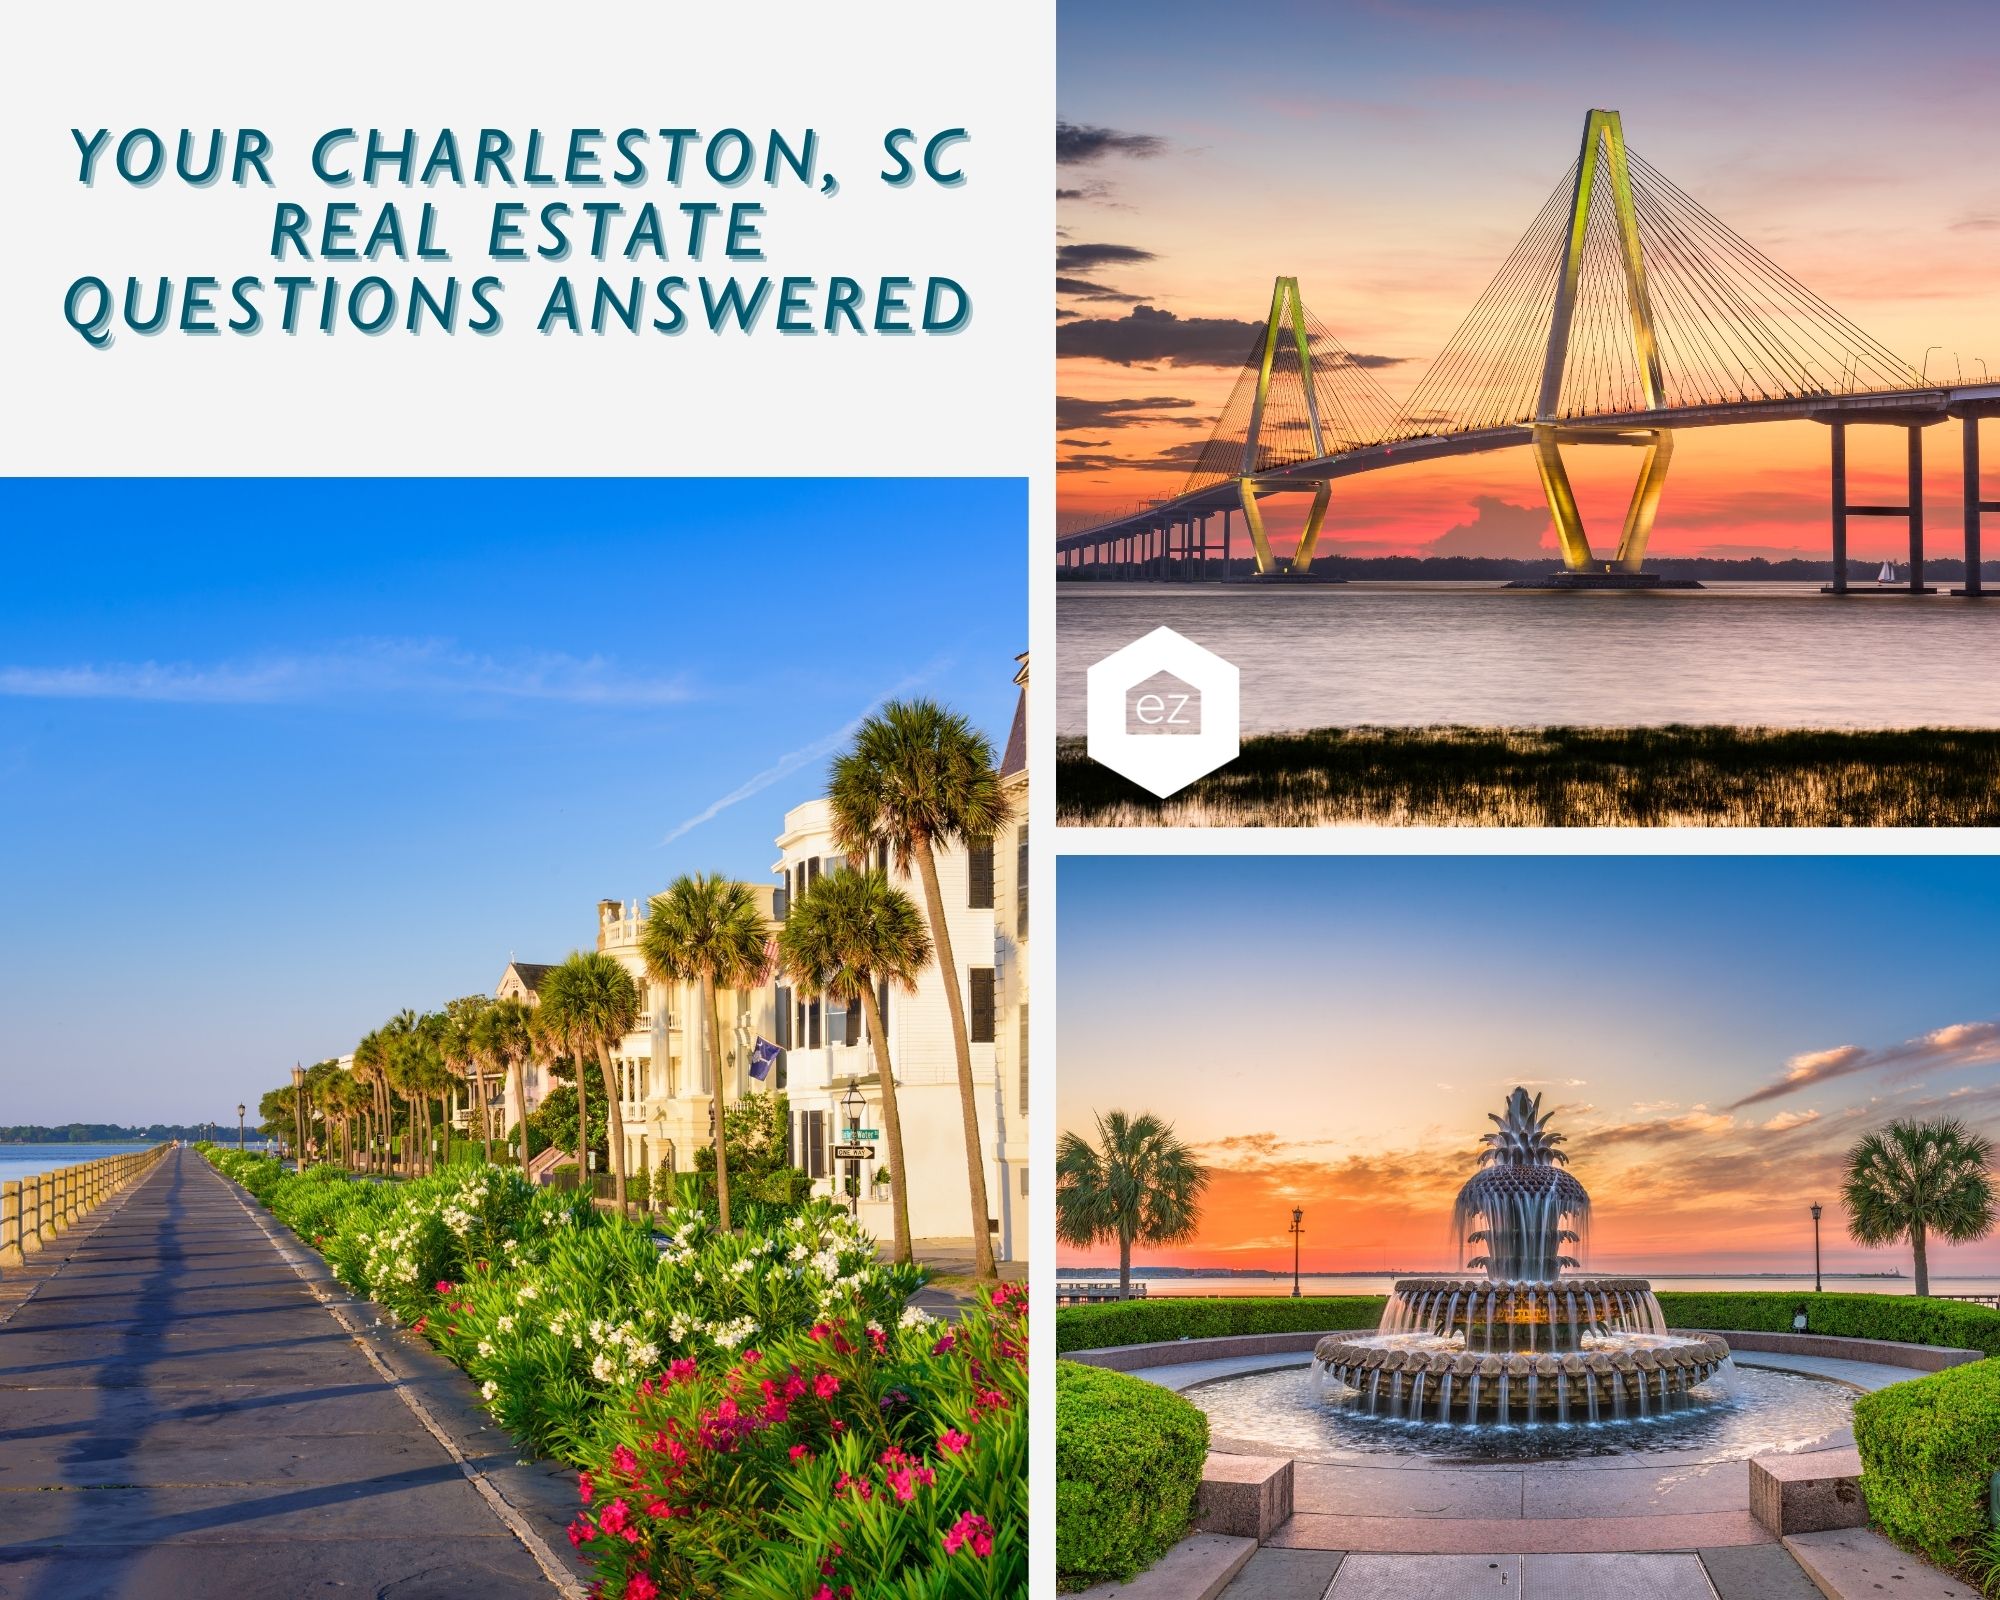 Photos of Charleston South Carolina downtown, and Charleston Bridge